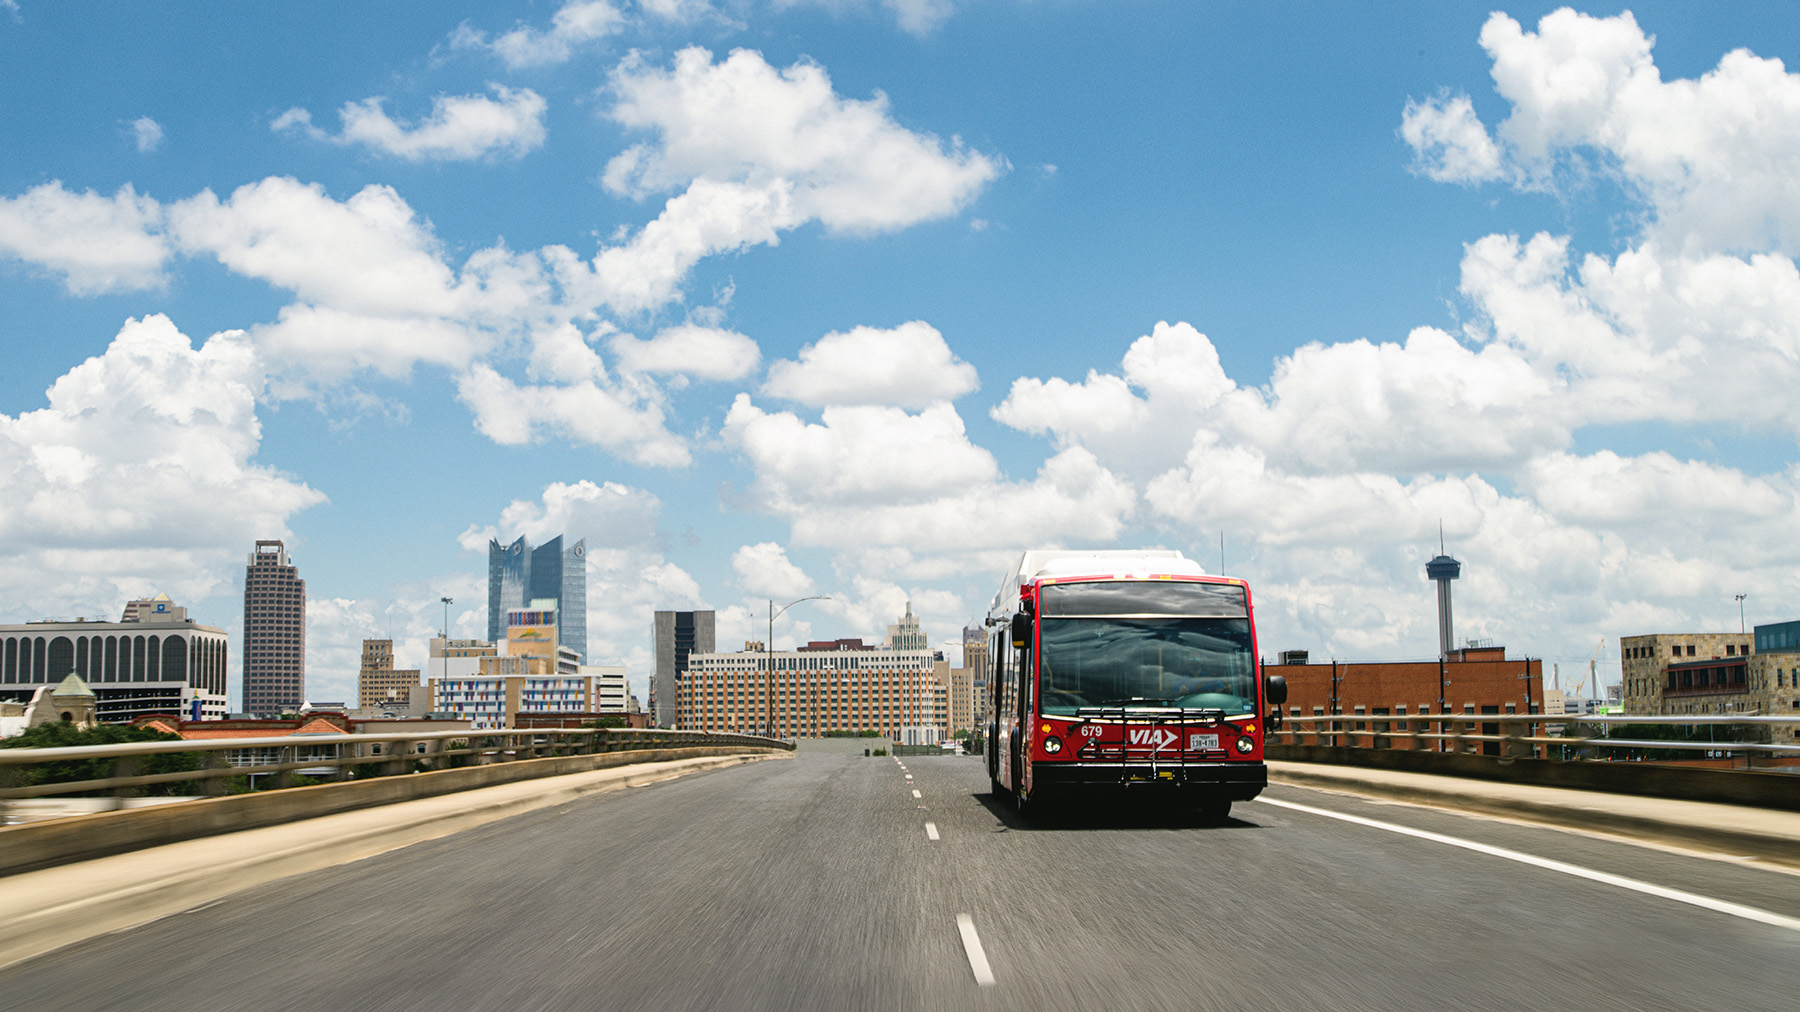 VIA bus in San Antonio, TX by commercial photographer, Josh Huskin.